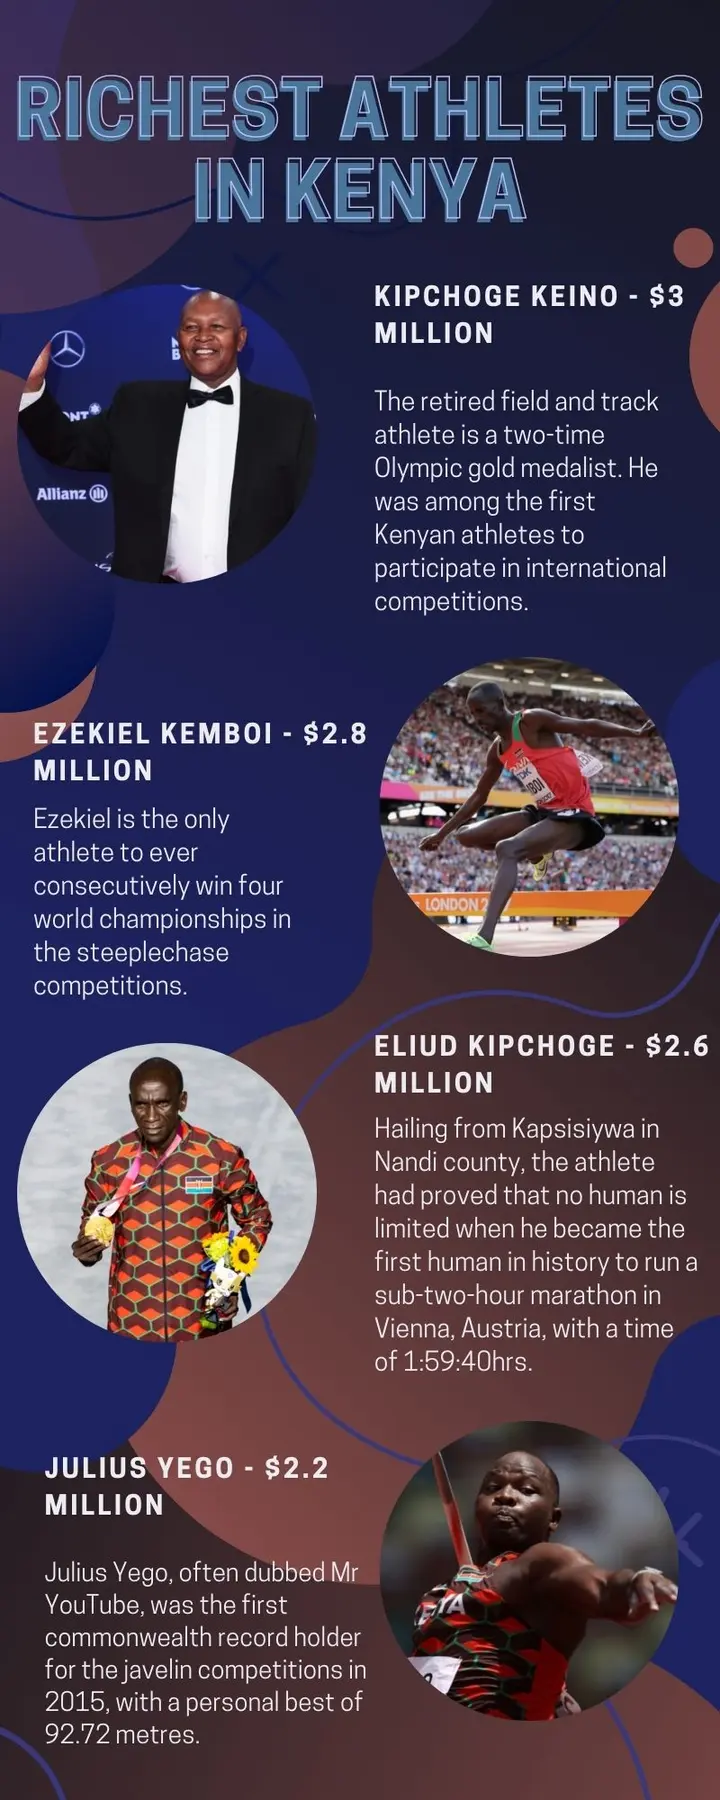 Richest athletes in Kenya